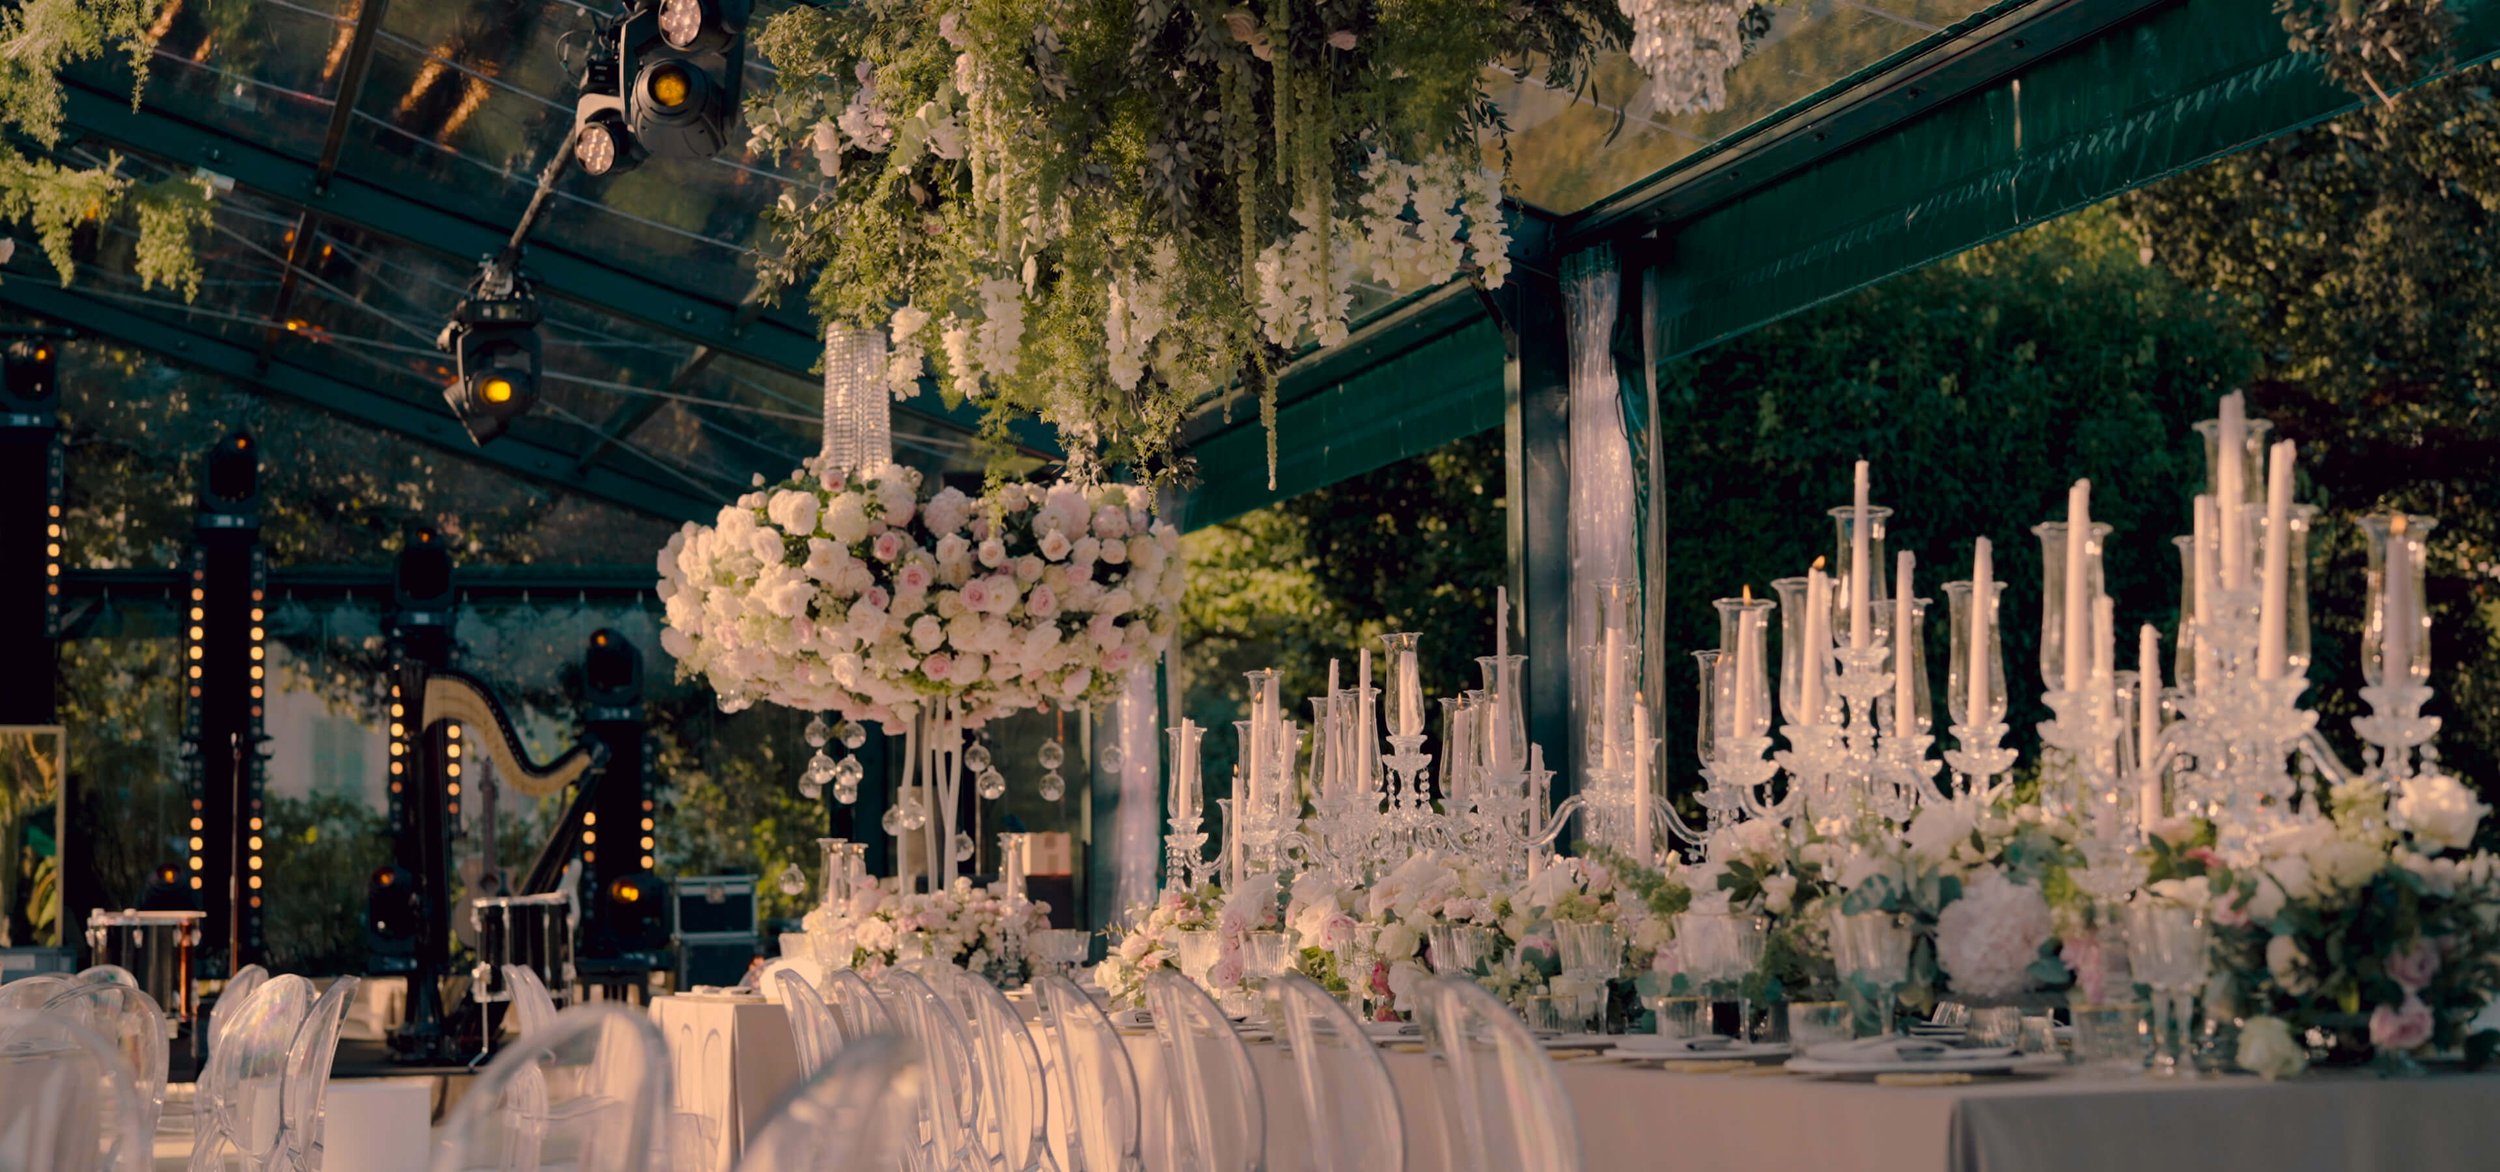 lake como Villa Balbiano luxury wedding reception decor